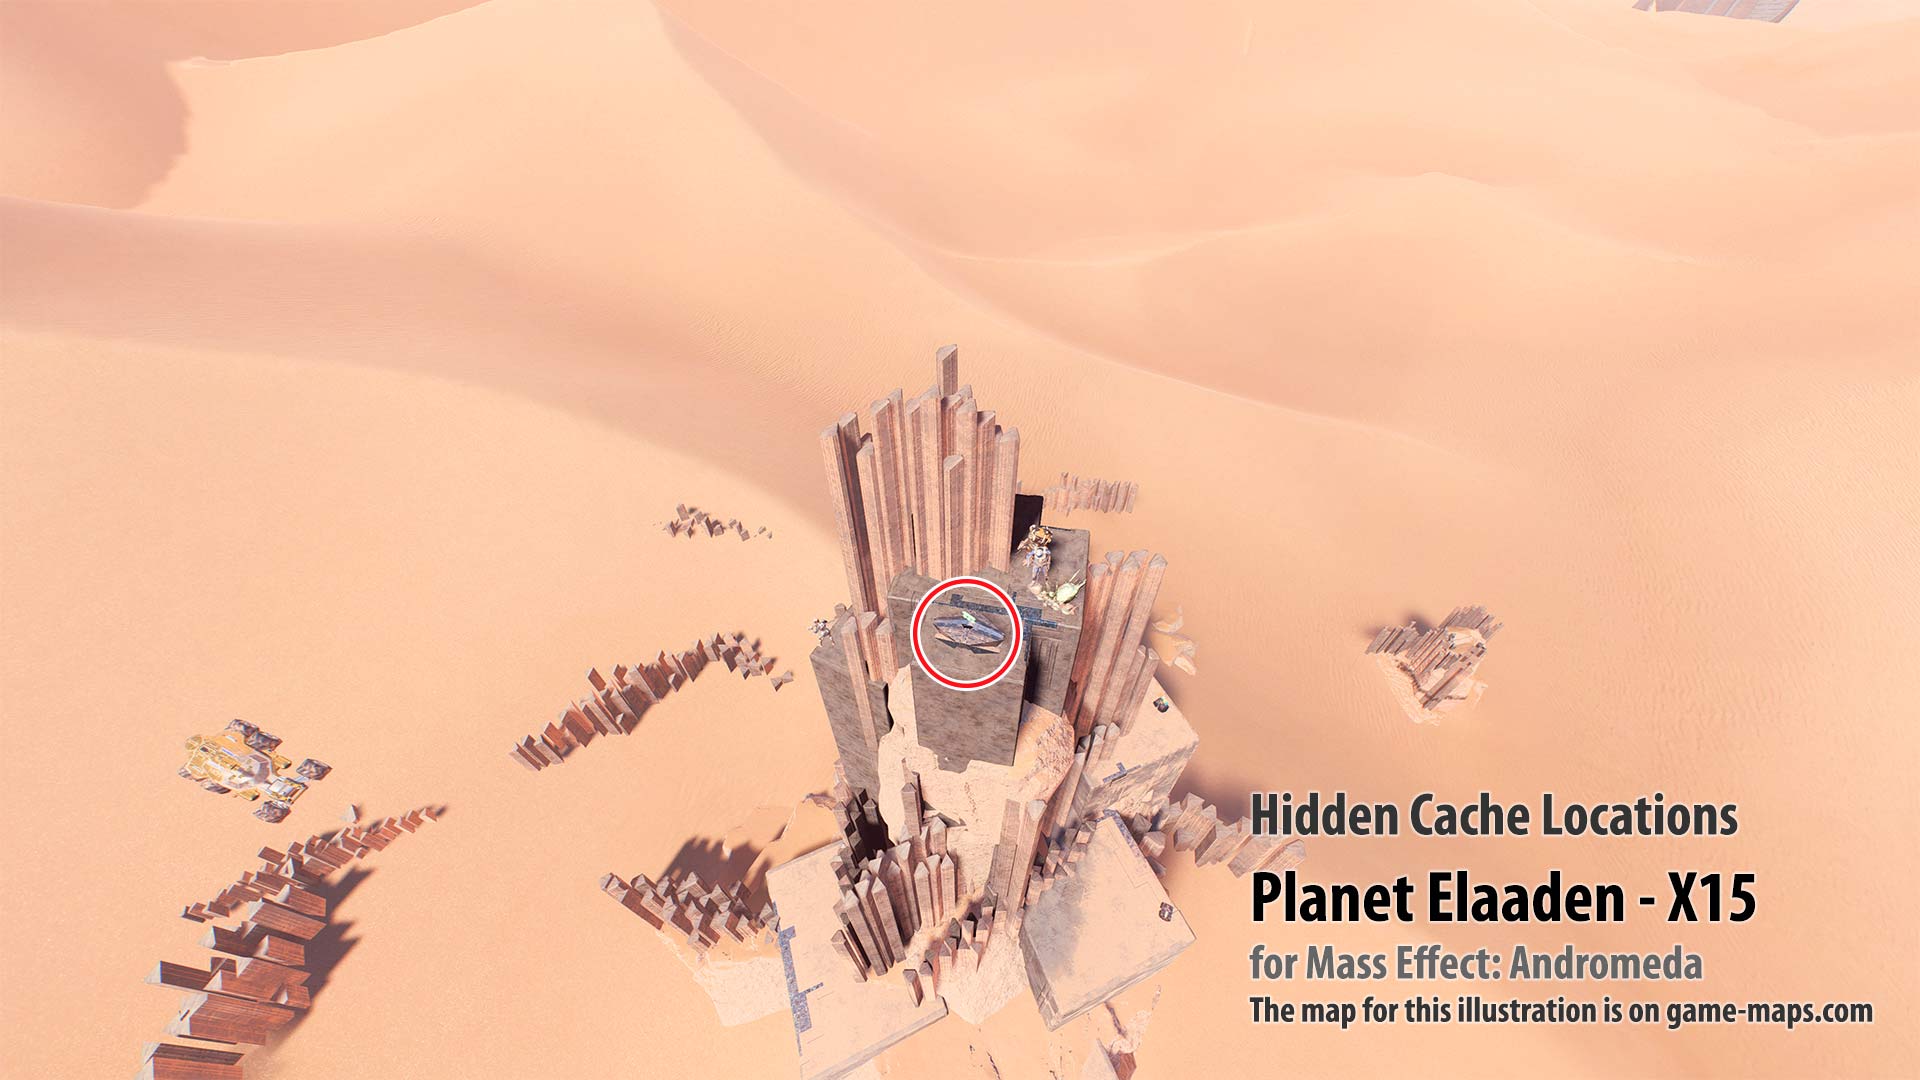 Hidden Cache - Planet Elaaden-X15 - Mass Effect Andromeda.